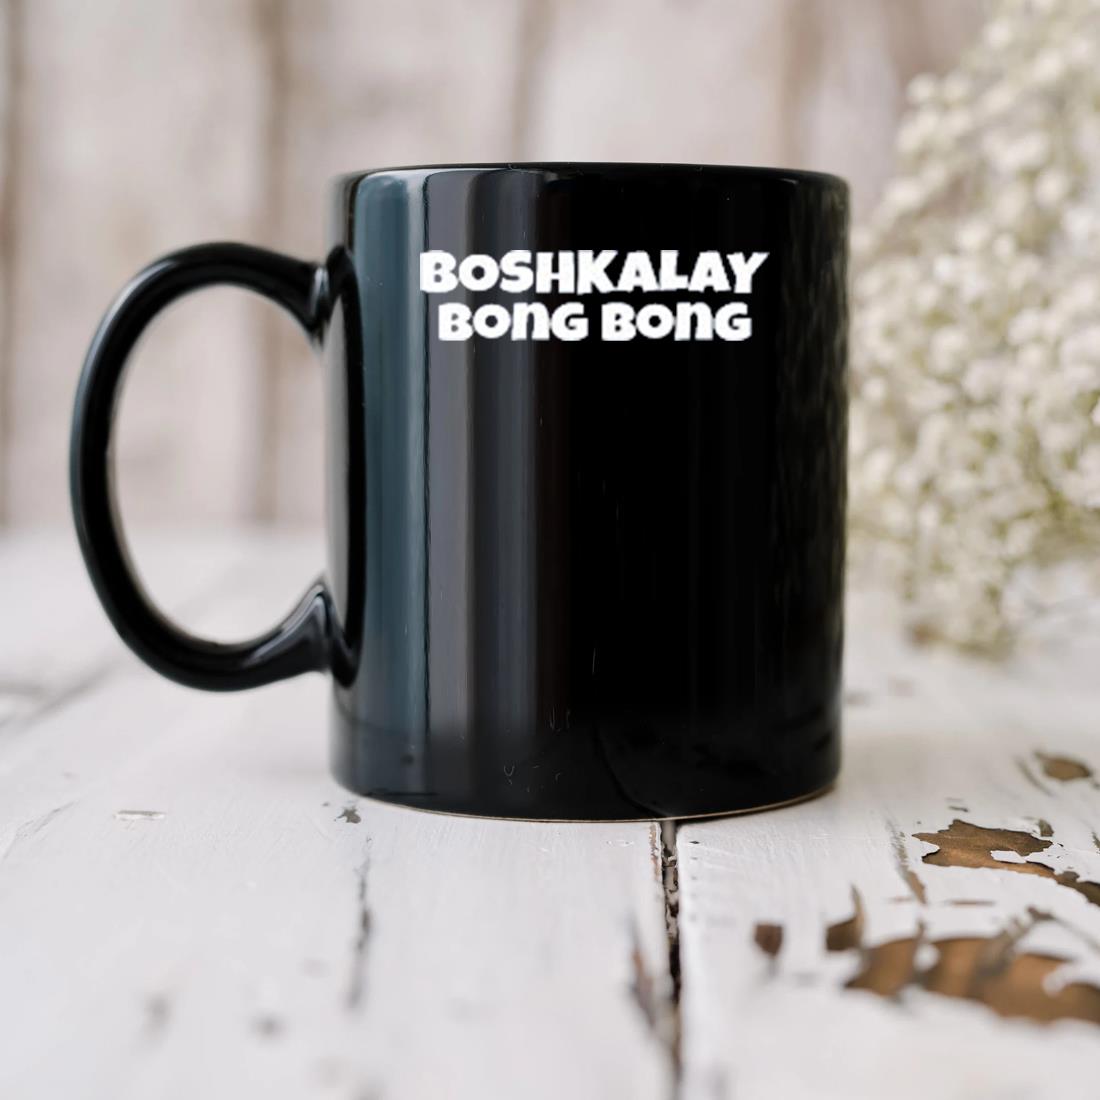 Boshkalay Bong Bong Mug